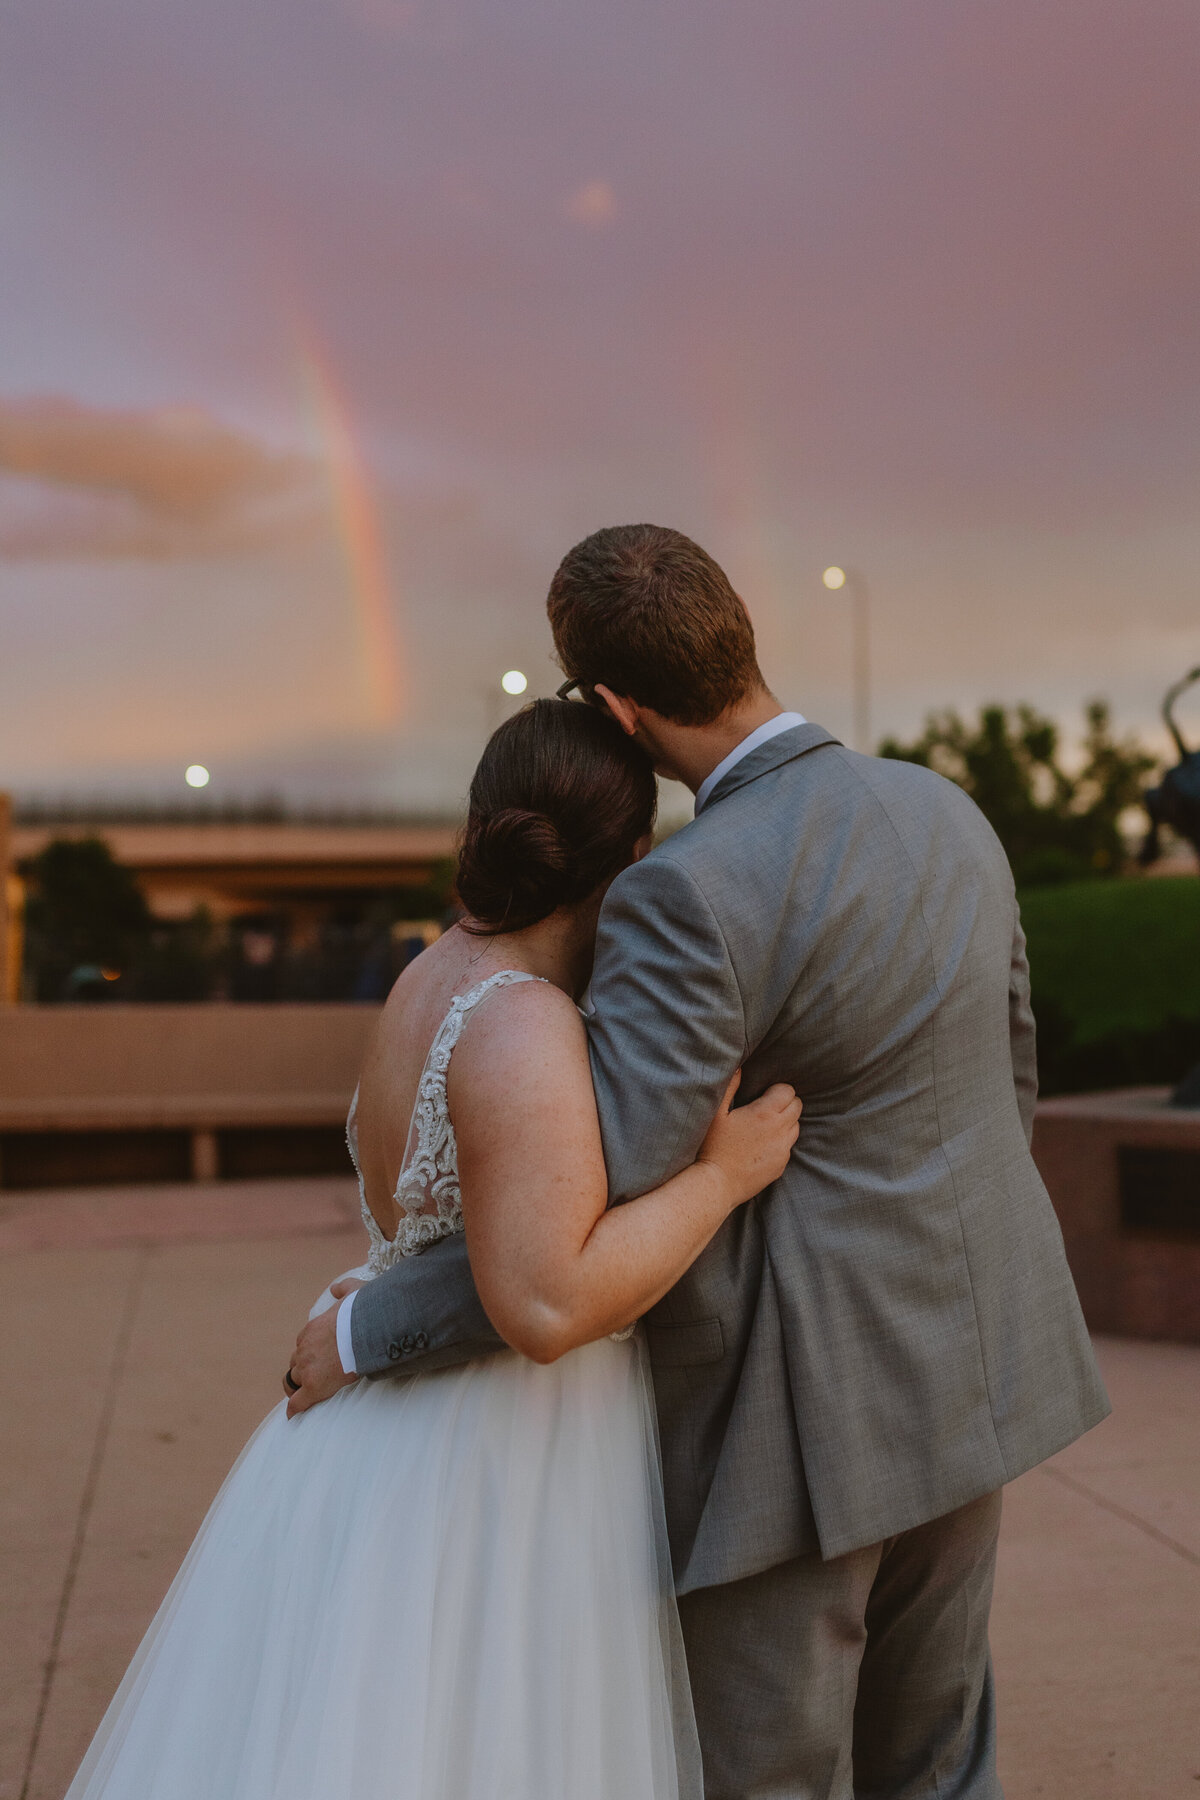 bride and groom look at rainbow